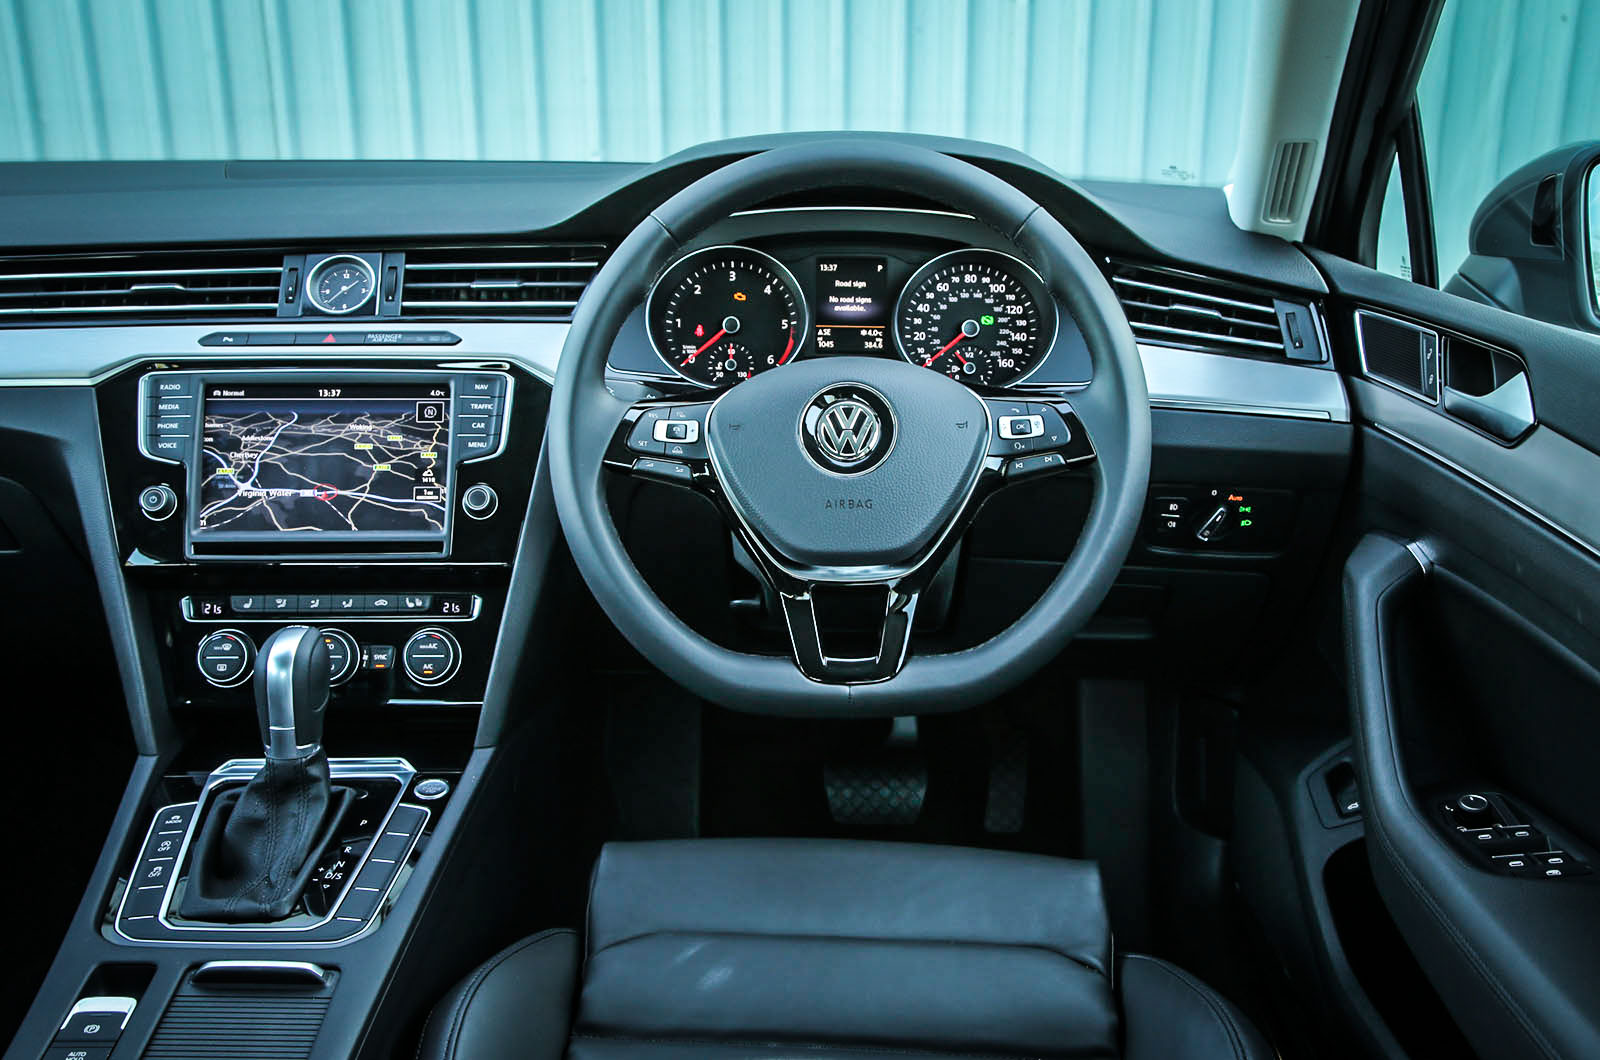 The driver's view from inside Volkswagen Passat